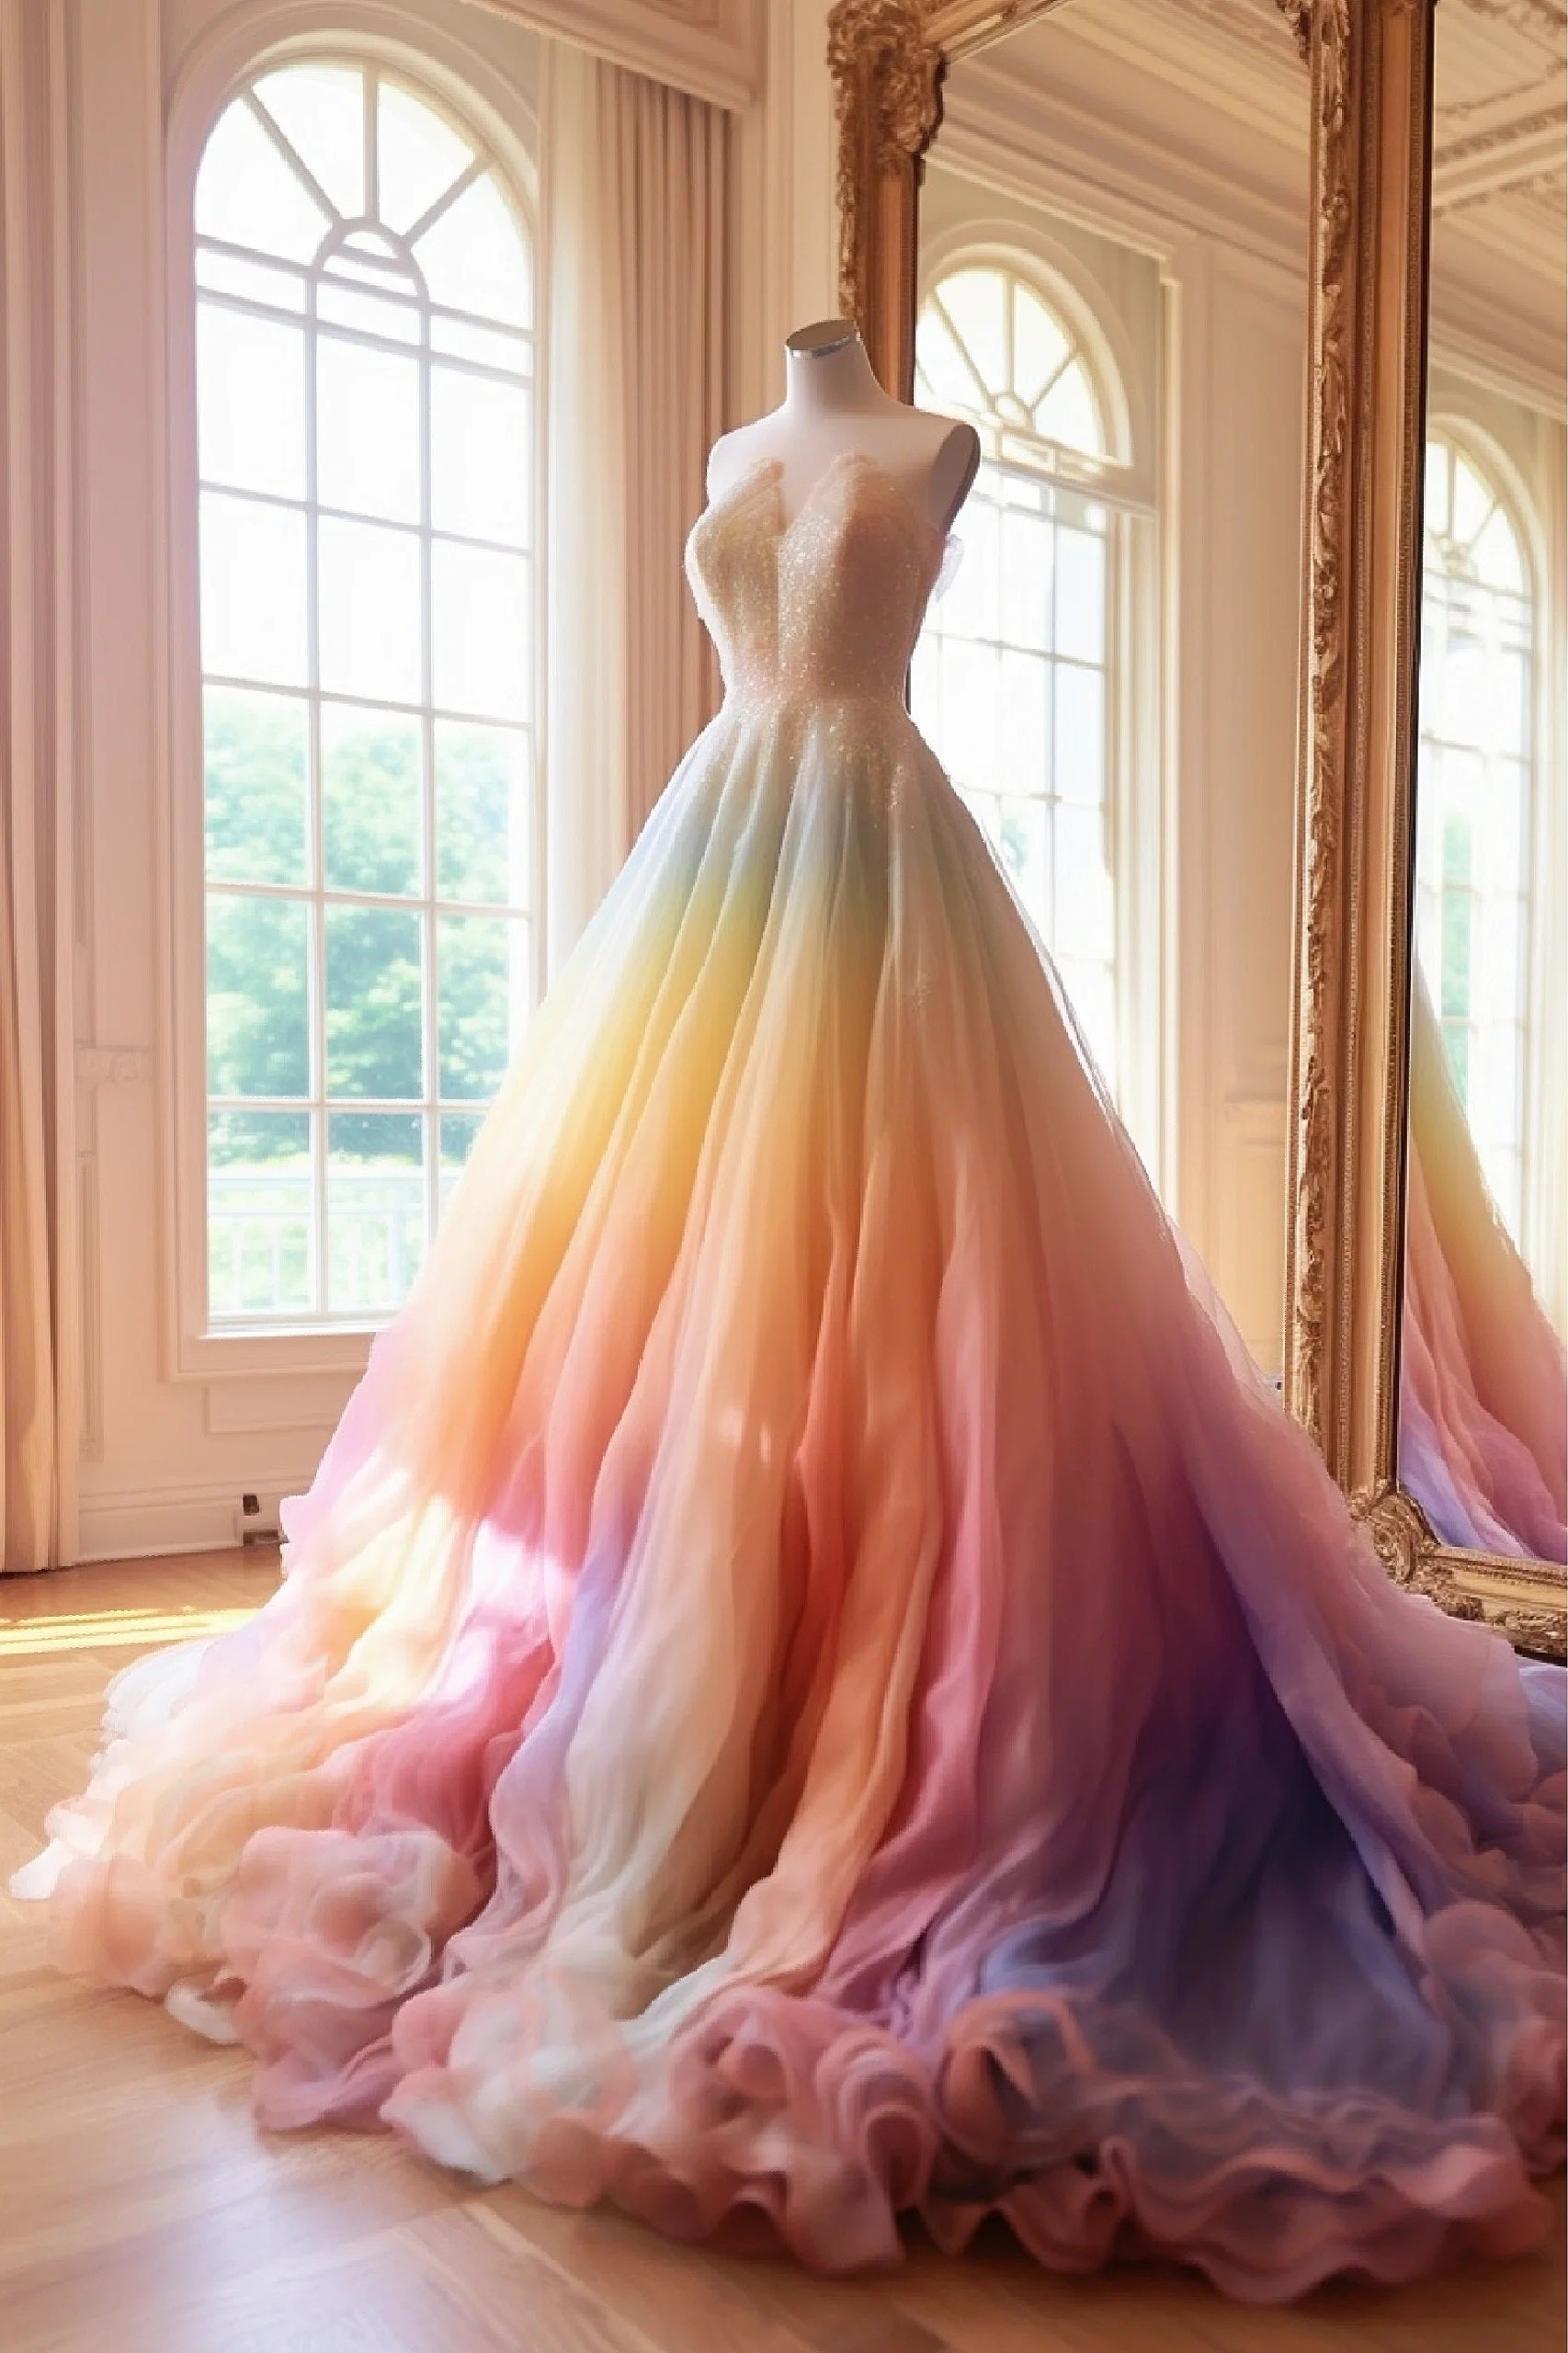 Wedding Dresses,Wedding Gown,Princess Wedding Dresses elegant ball gowns  wedding dresses,BD99298